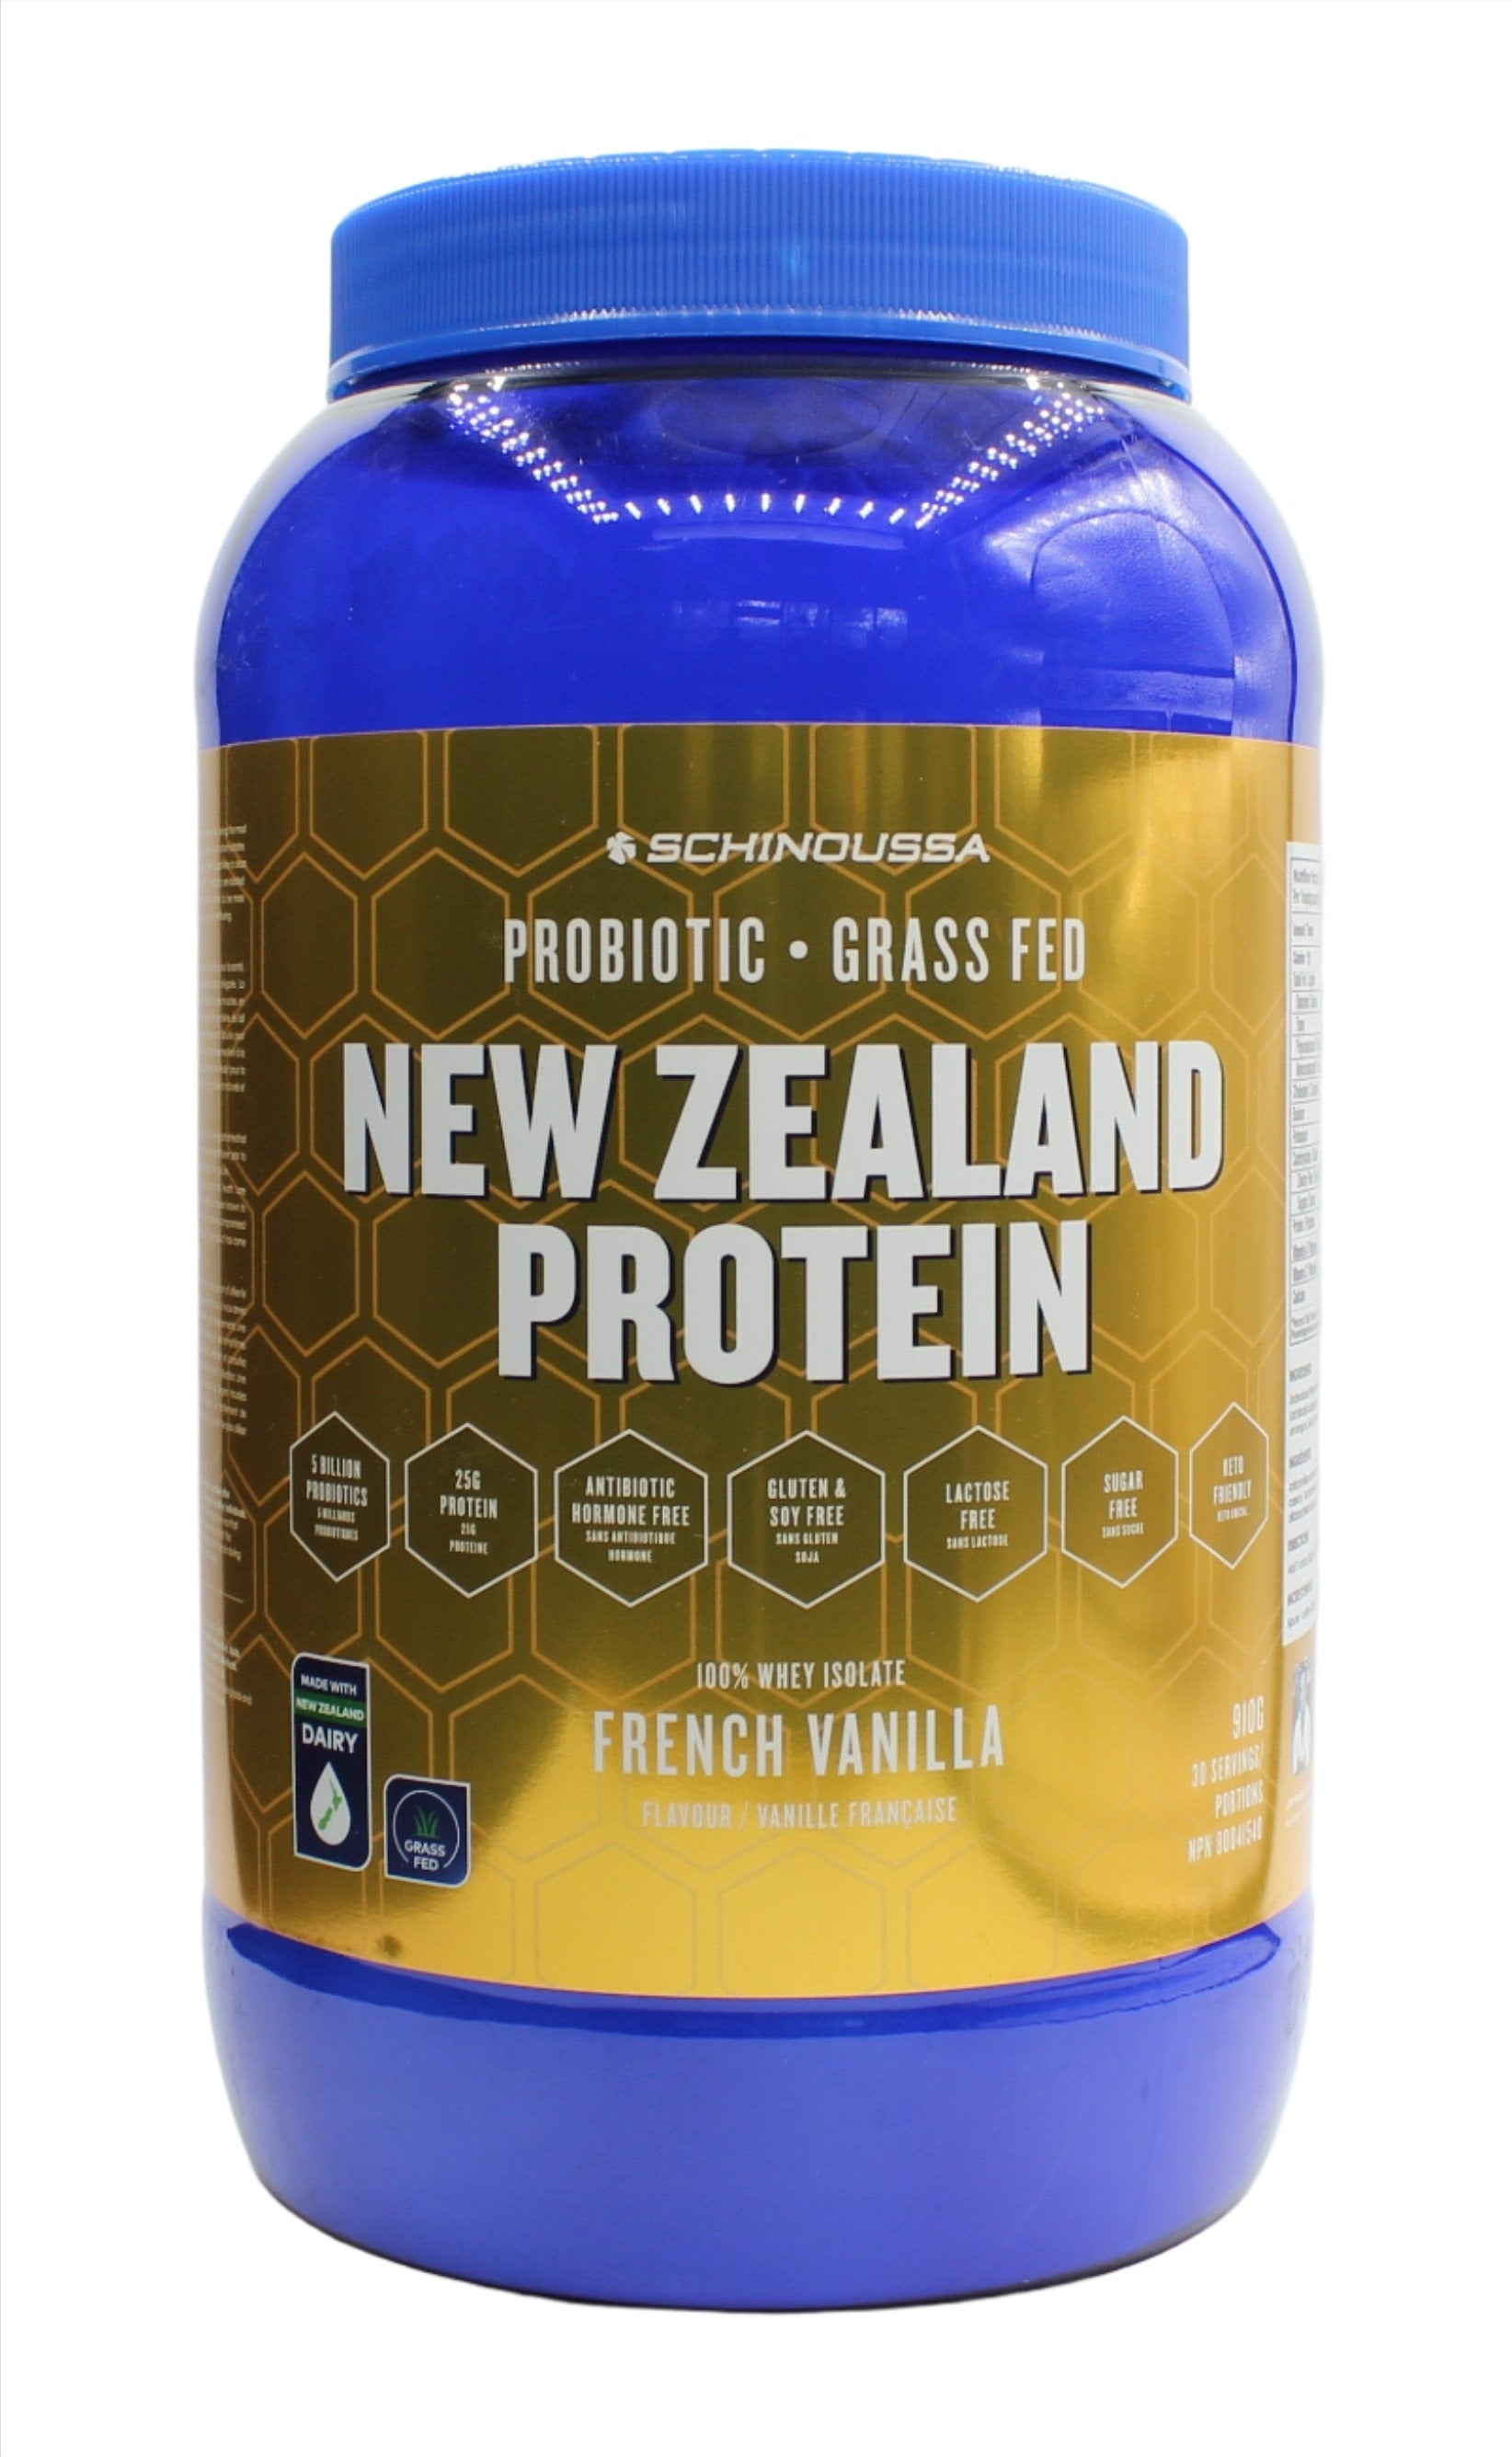 KAHA New Zealand Whey Isolate Protein